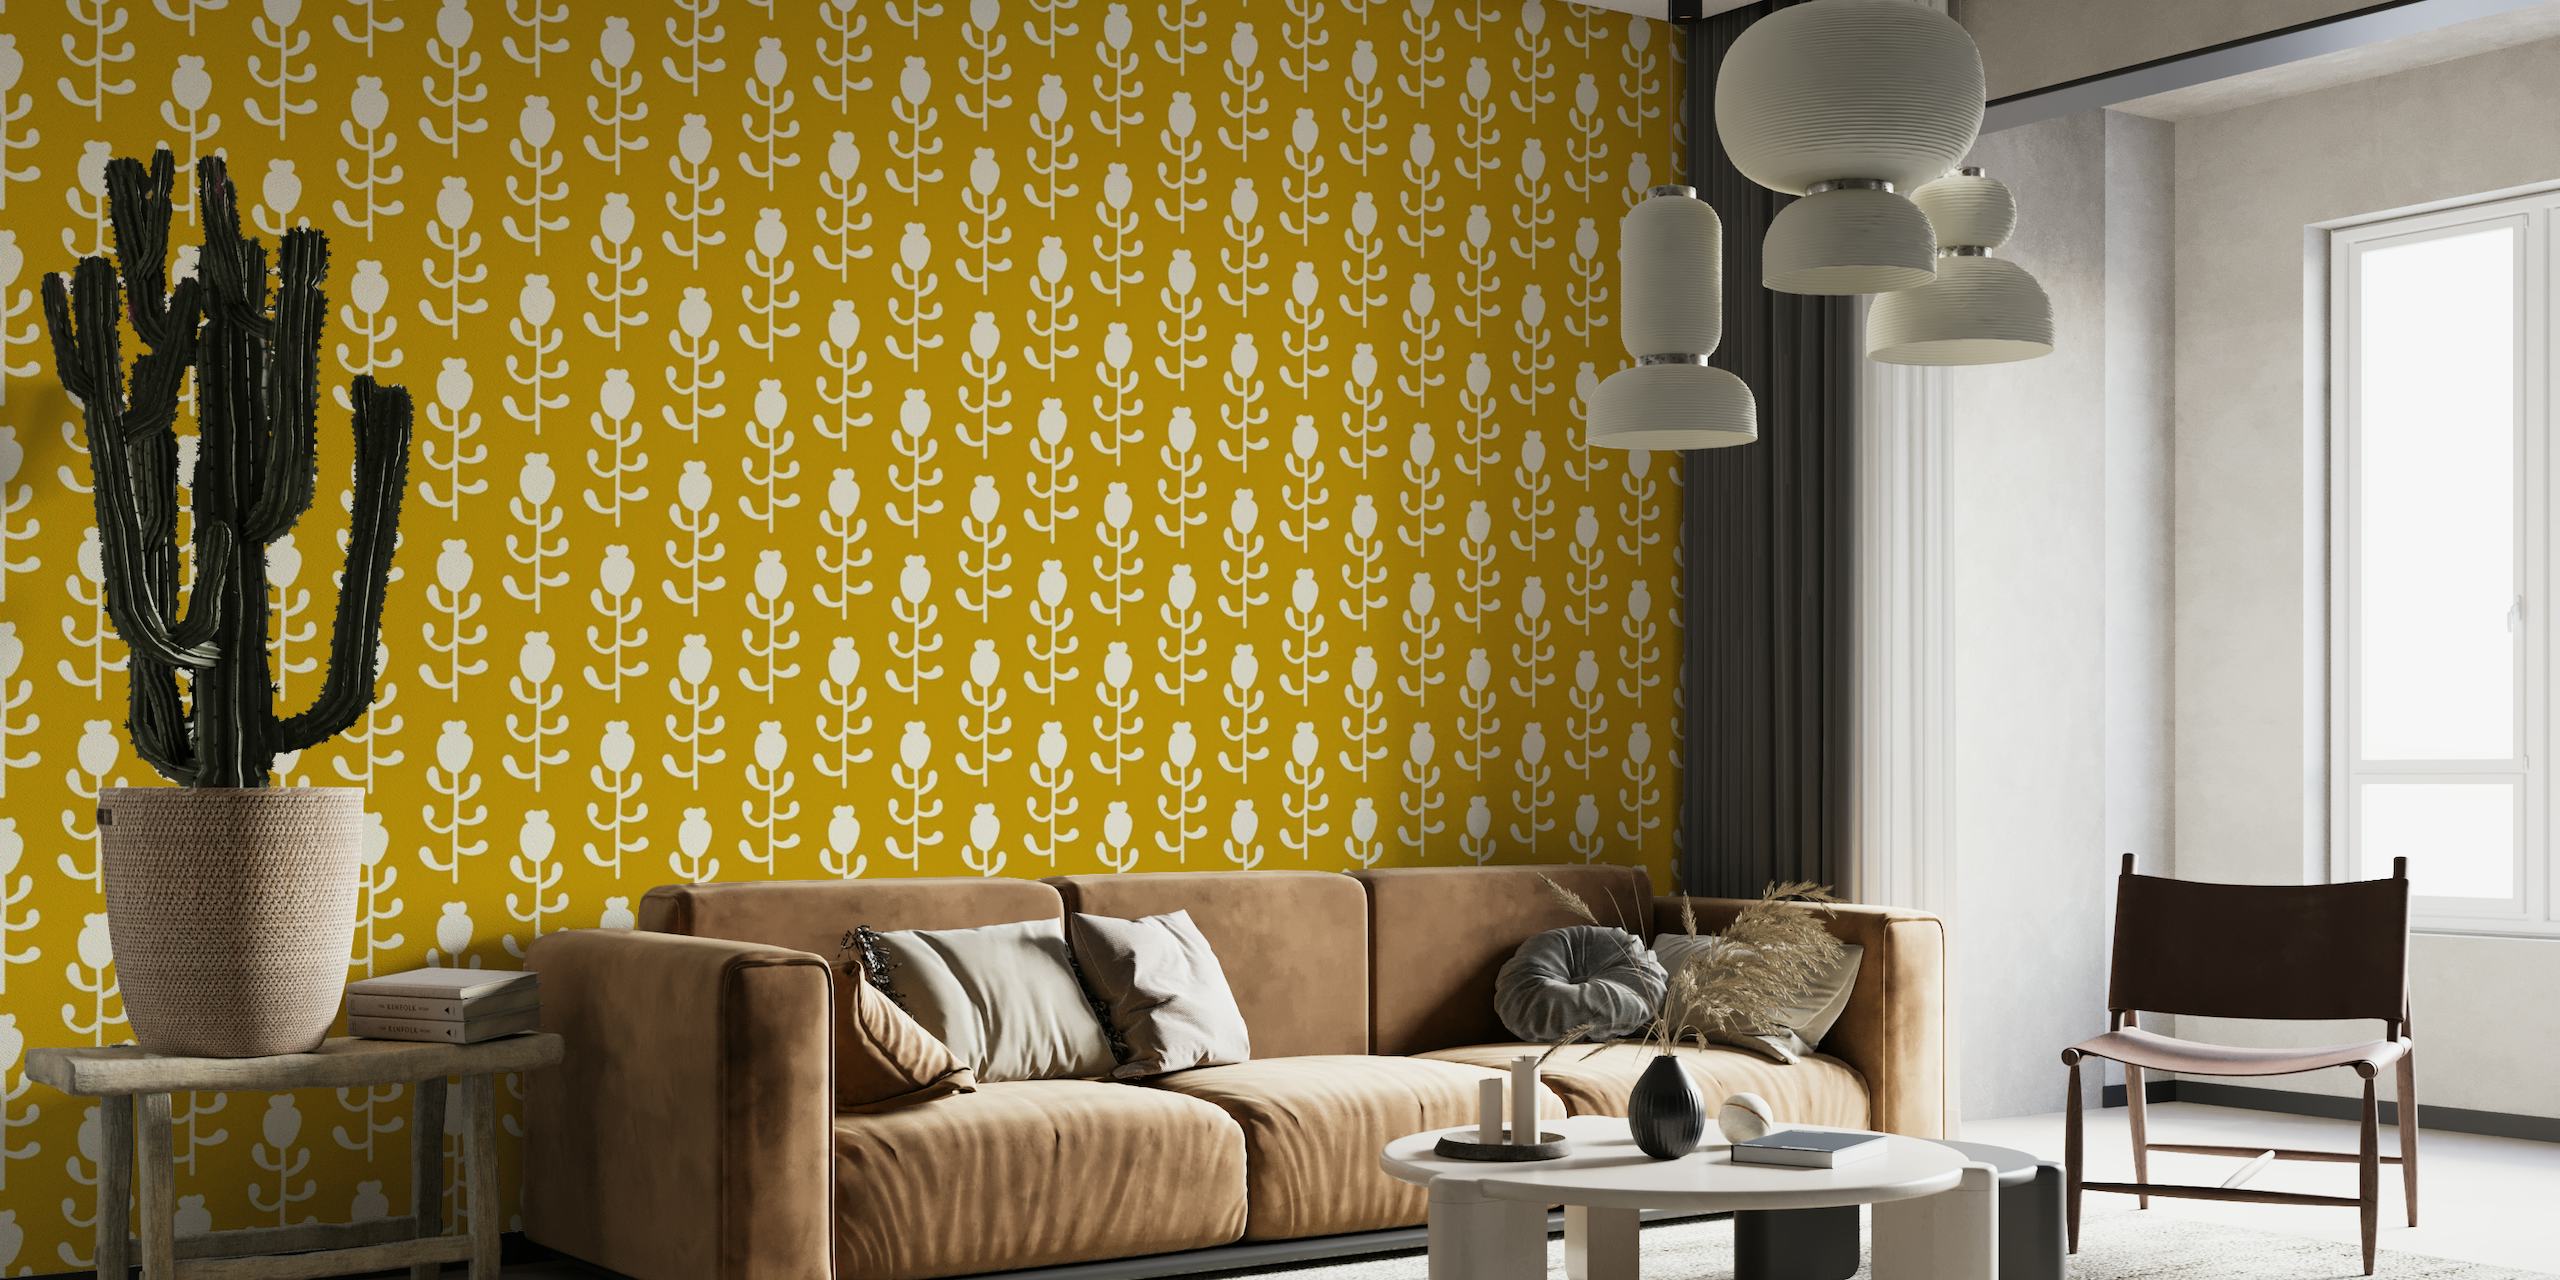 2569 - floral pattern, mustard yellow papiers peint